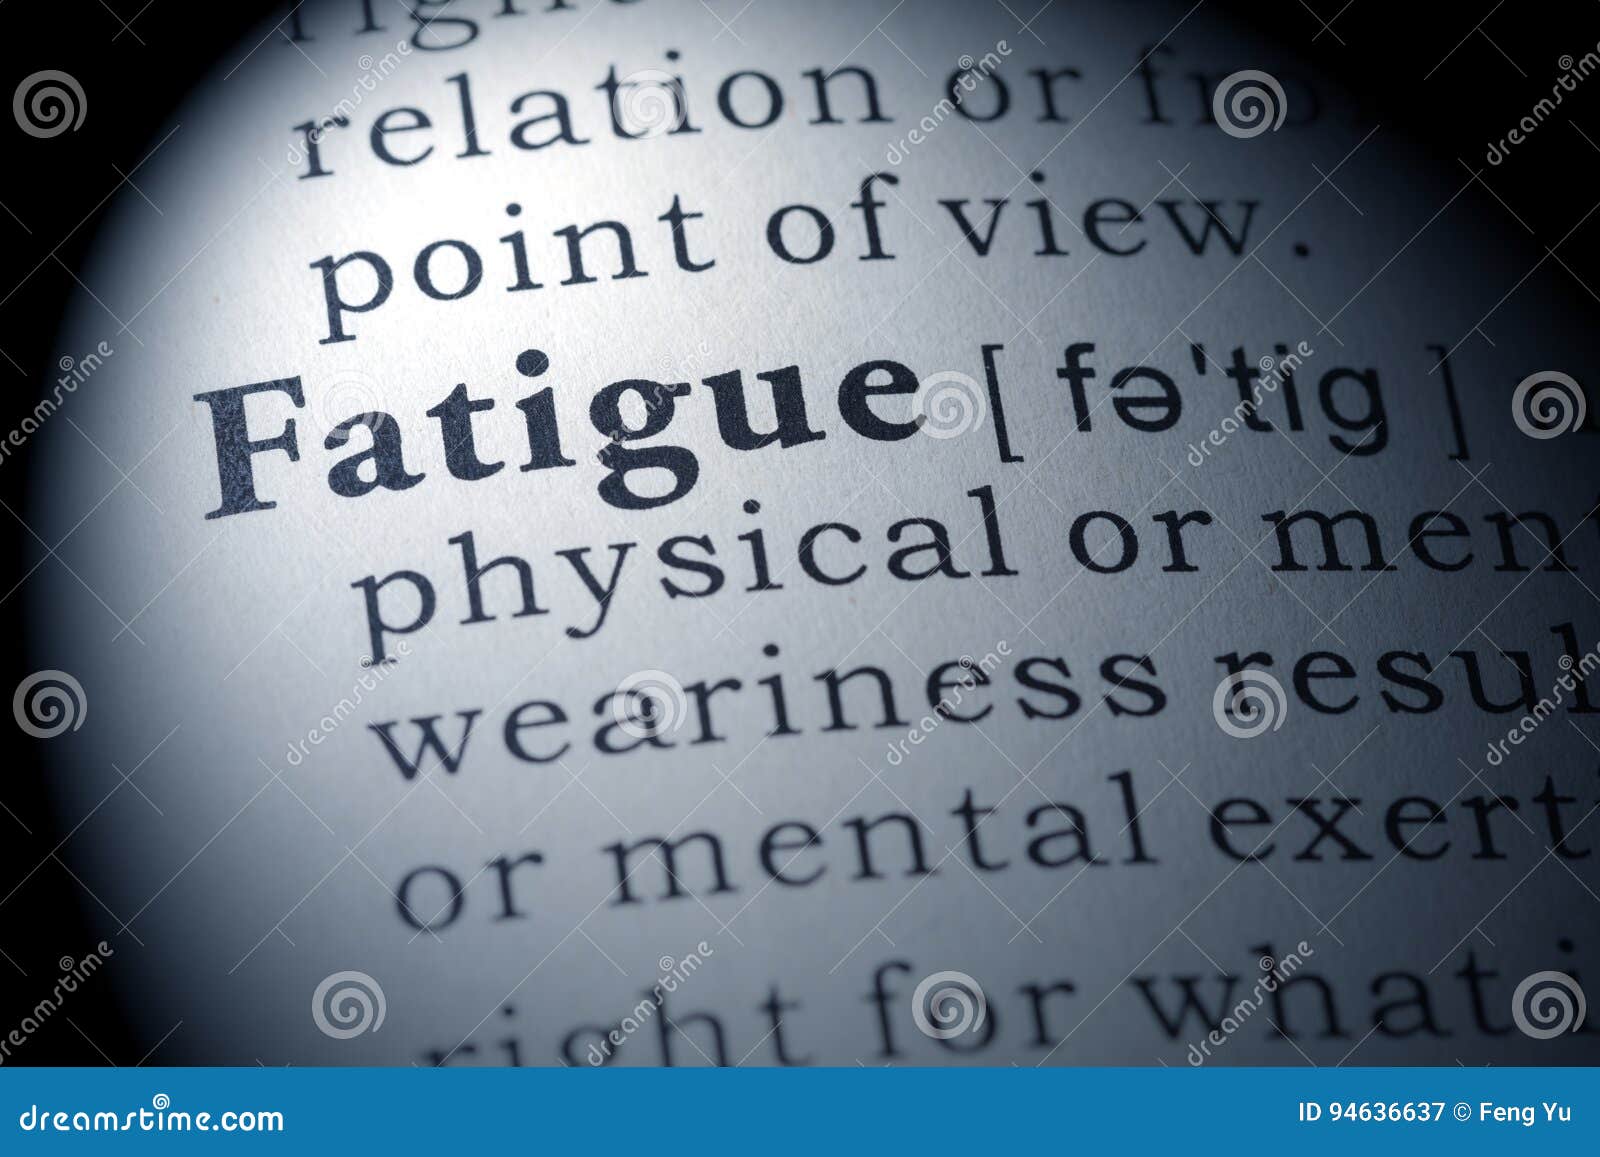 dictionary definition of fatigue